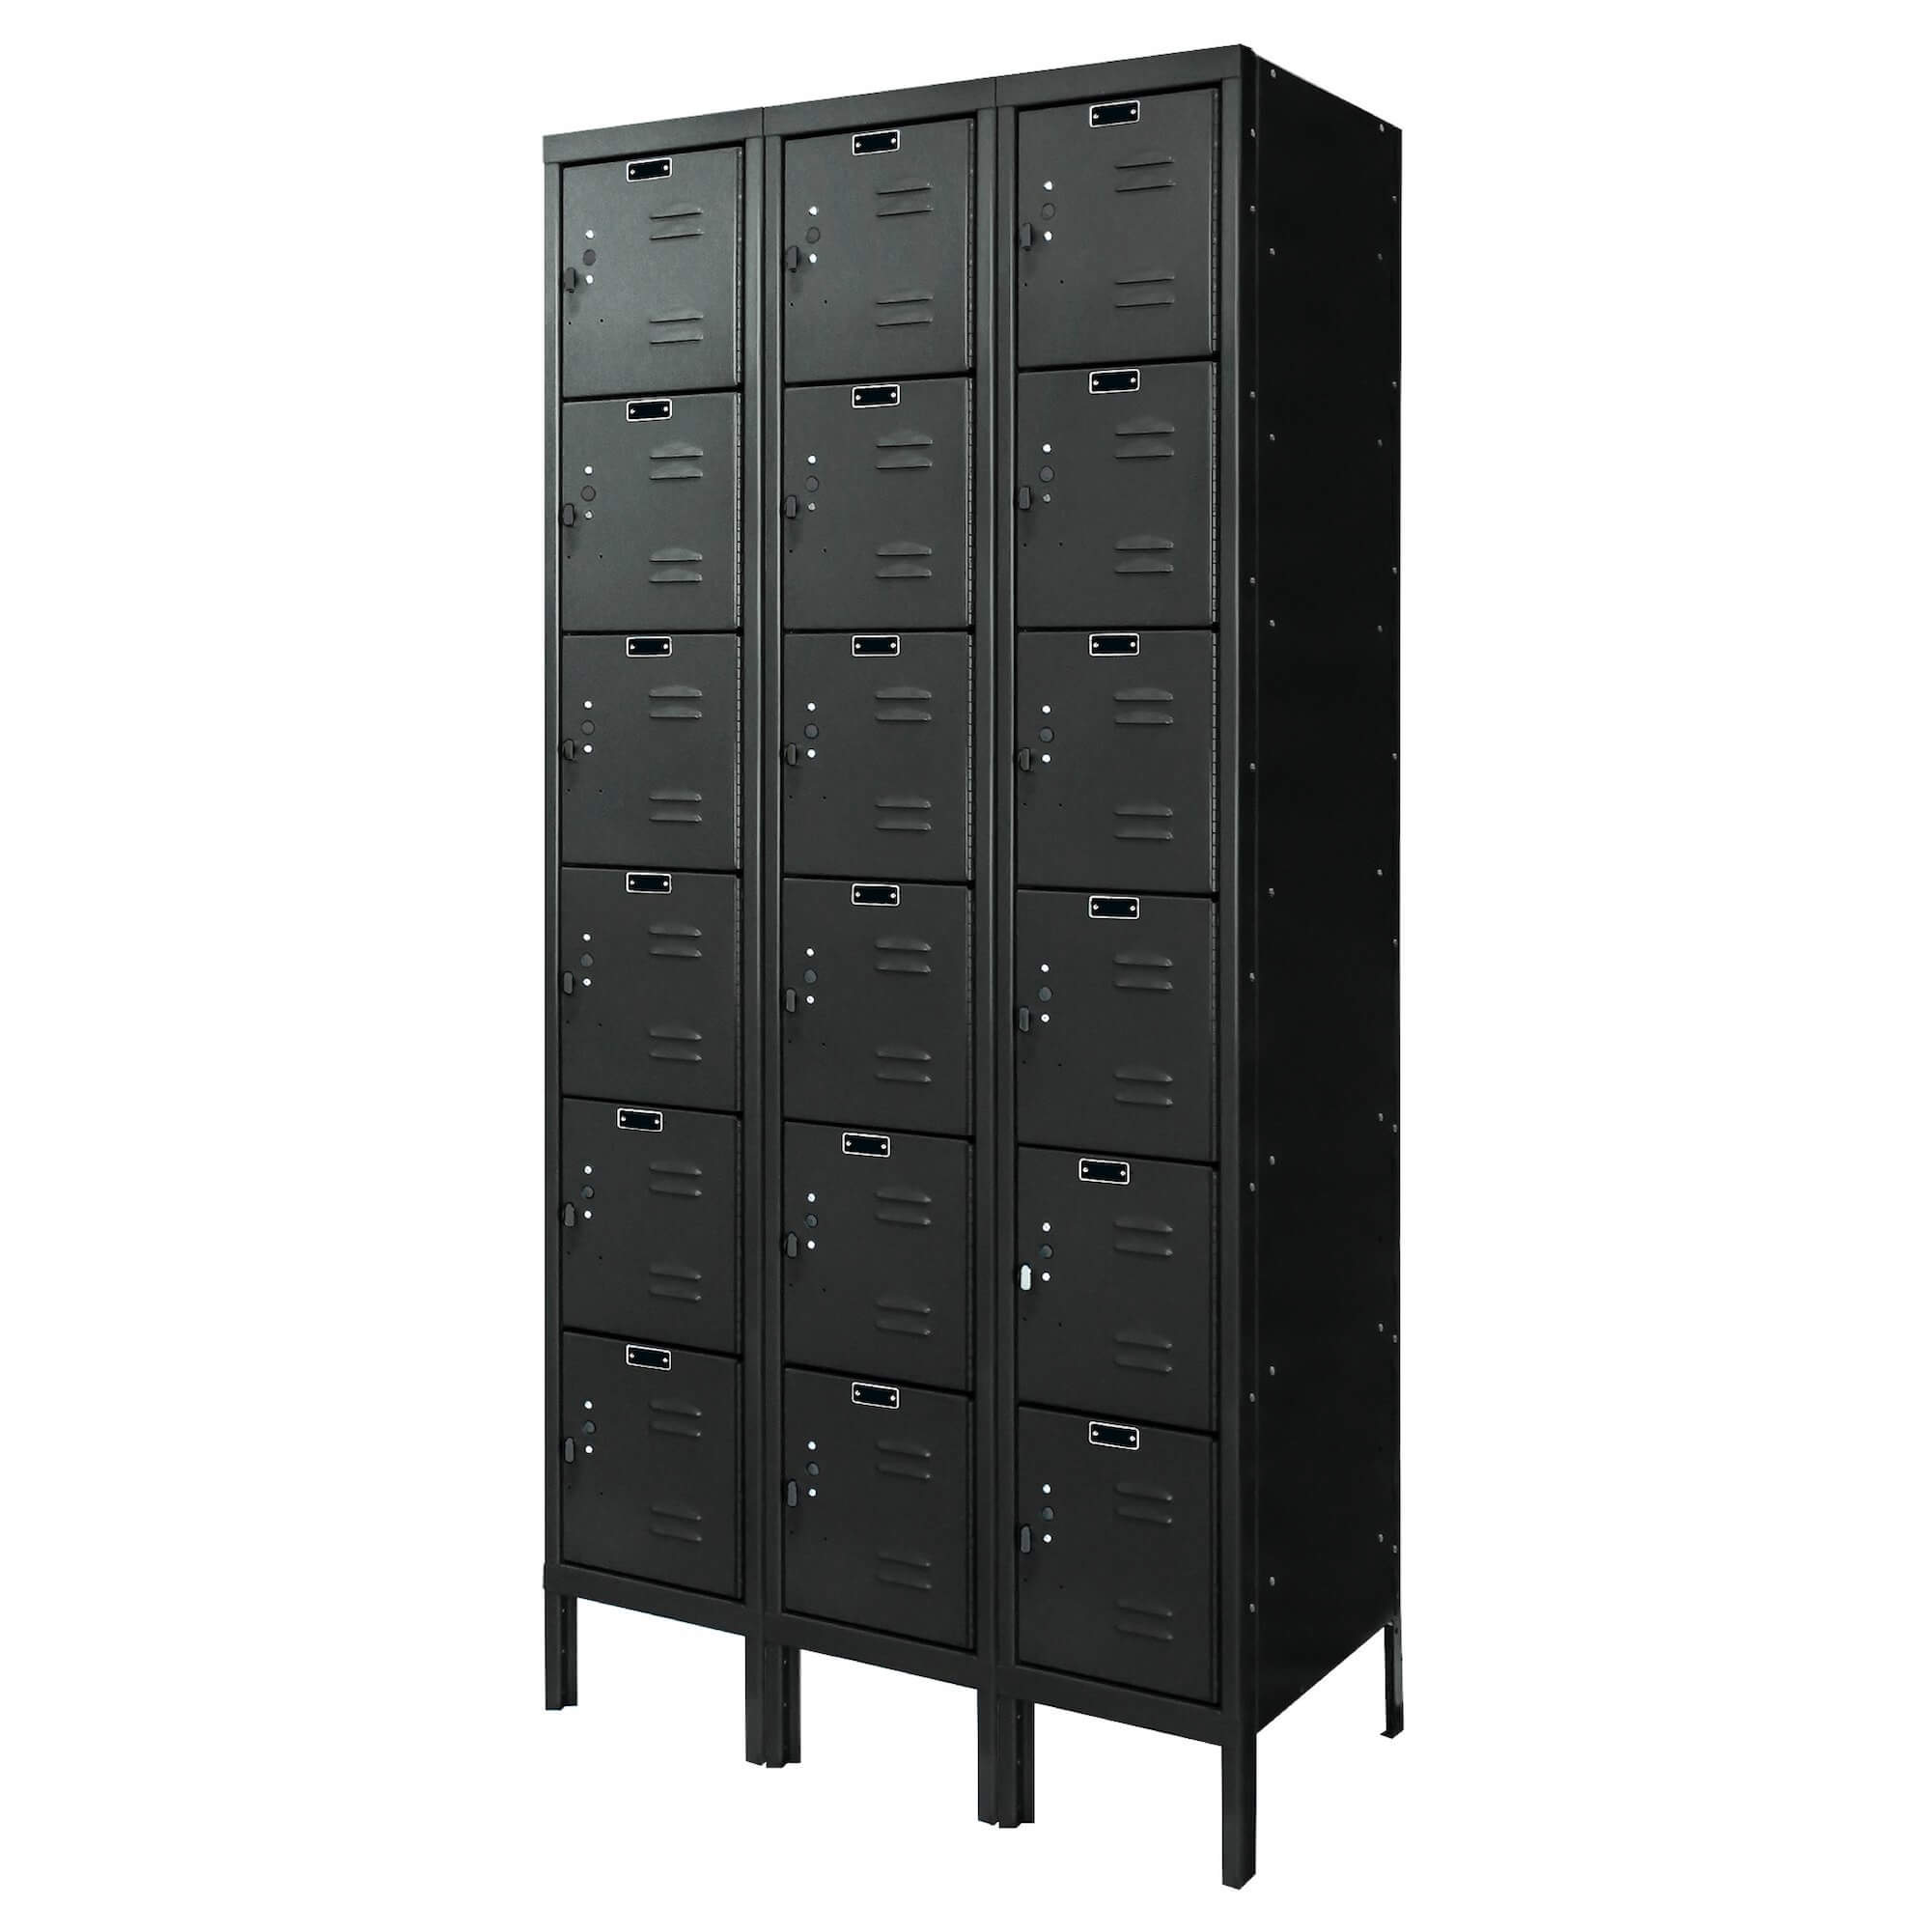 employee-lockers-metal-lockers-wardrobe-lockers-3w-6t-black-angle-view-right.jpg